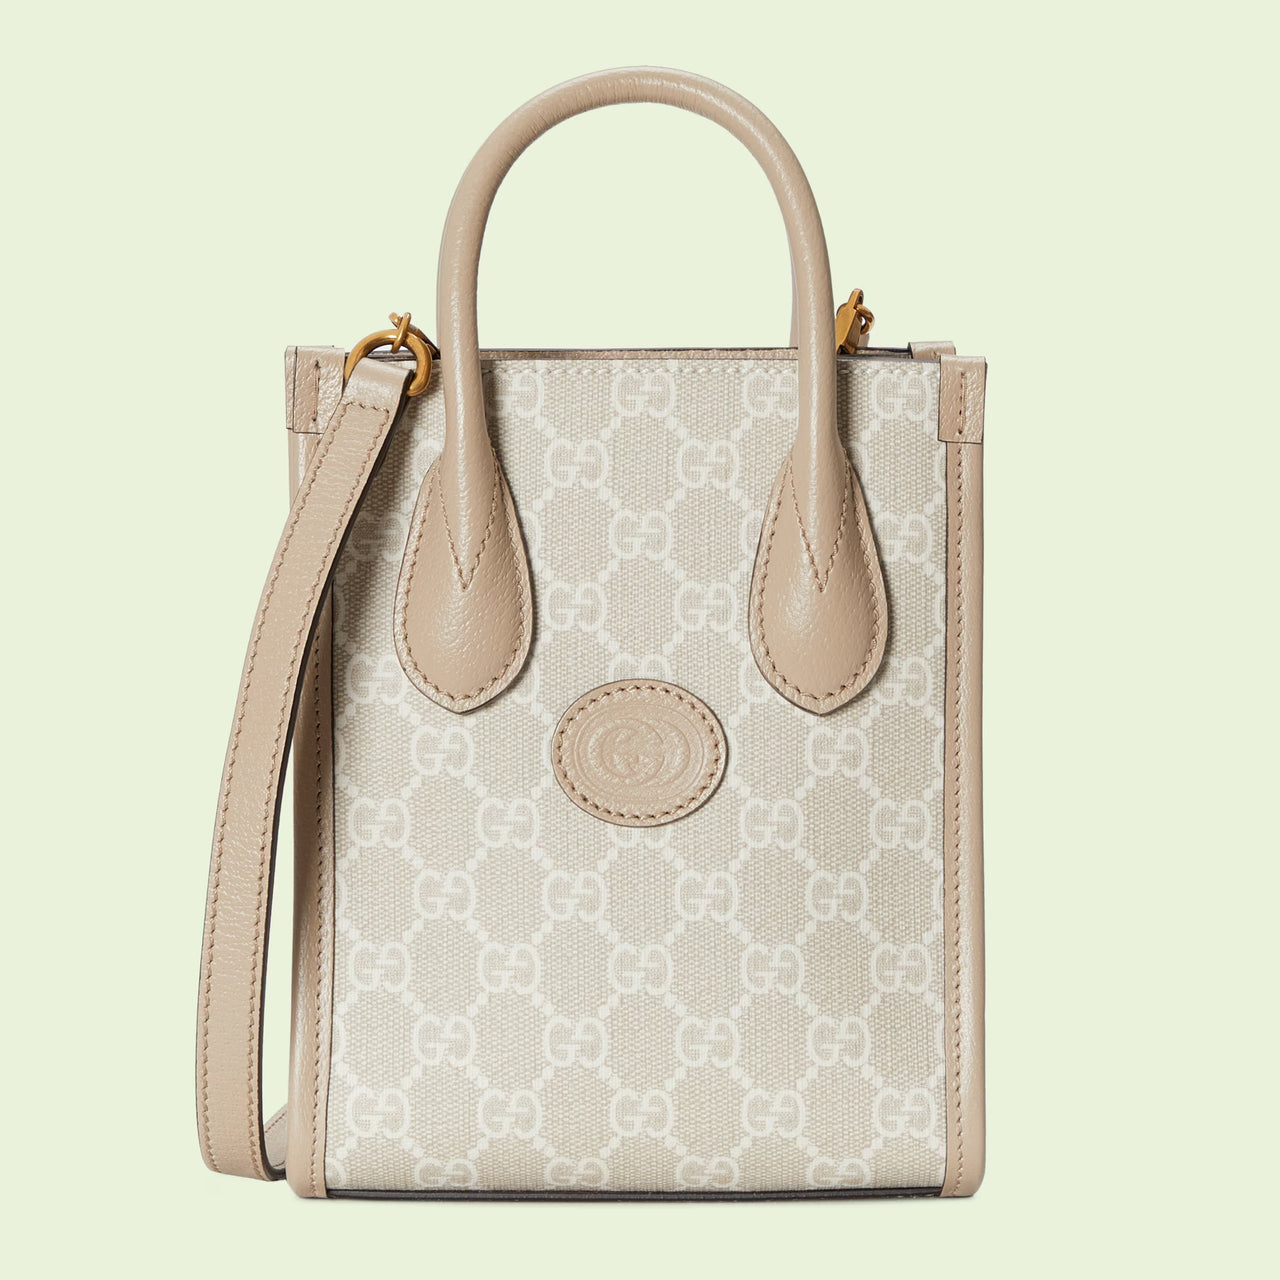 Gucci Mini Tote Bag with Interlocking G (Beige and White)